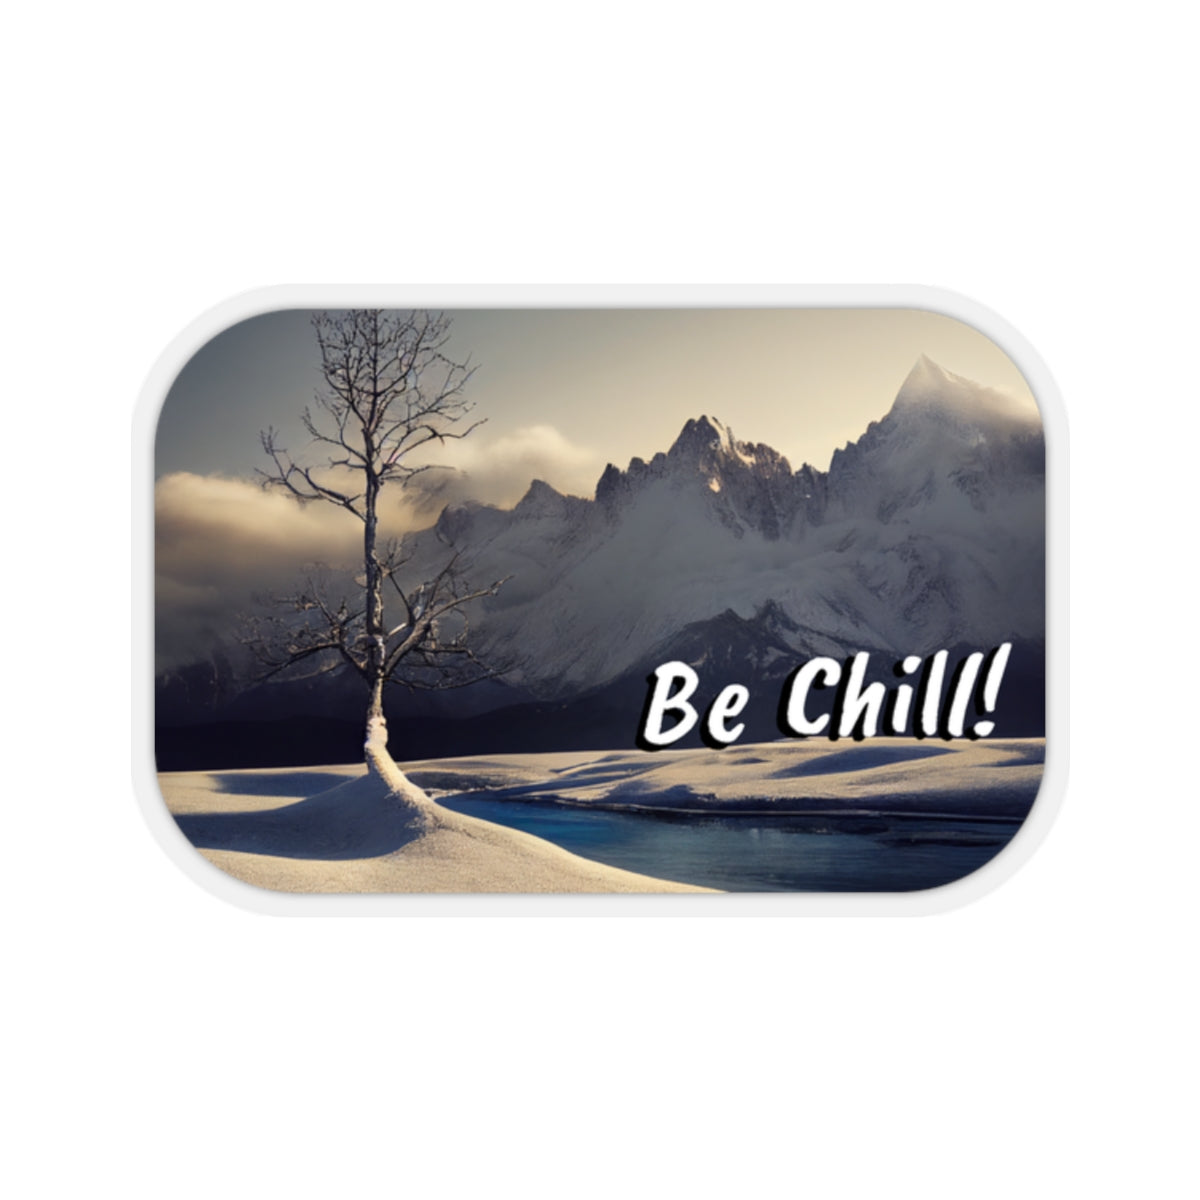 Be Chill! - Kiss-Cut Stickers